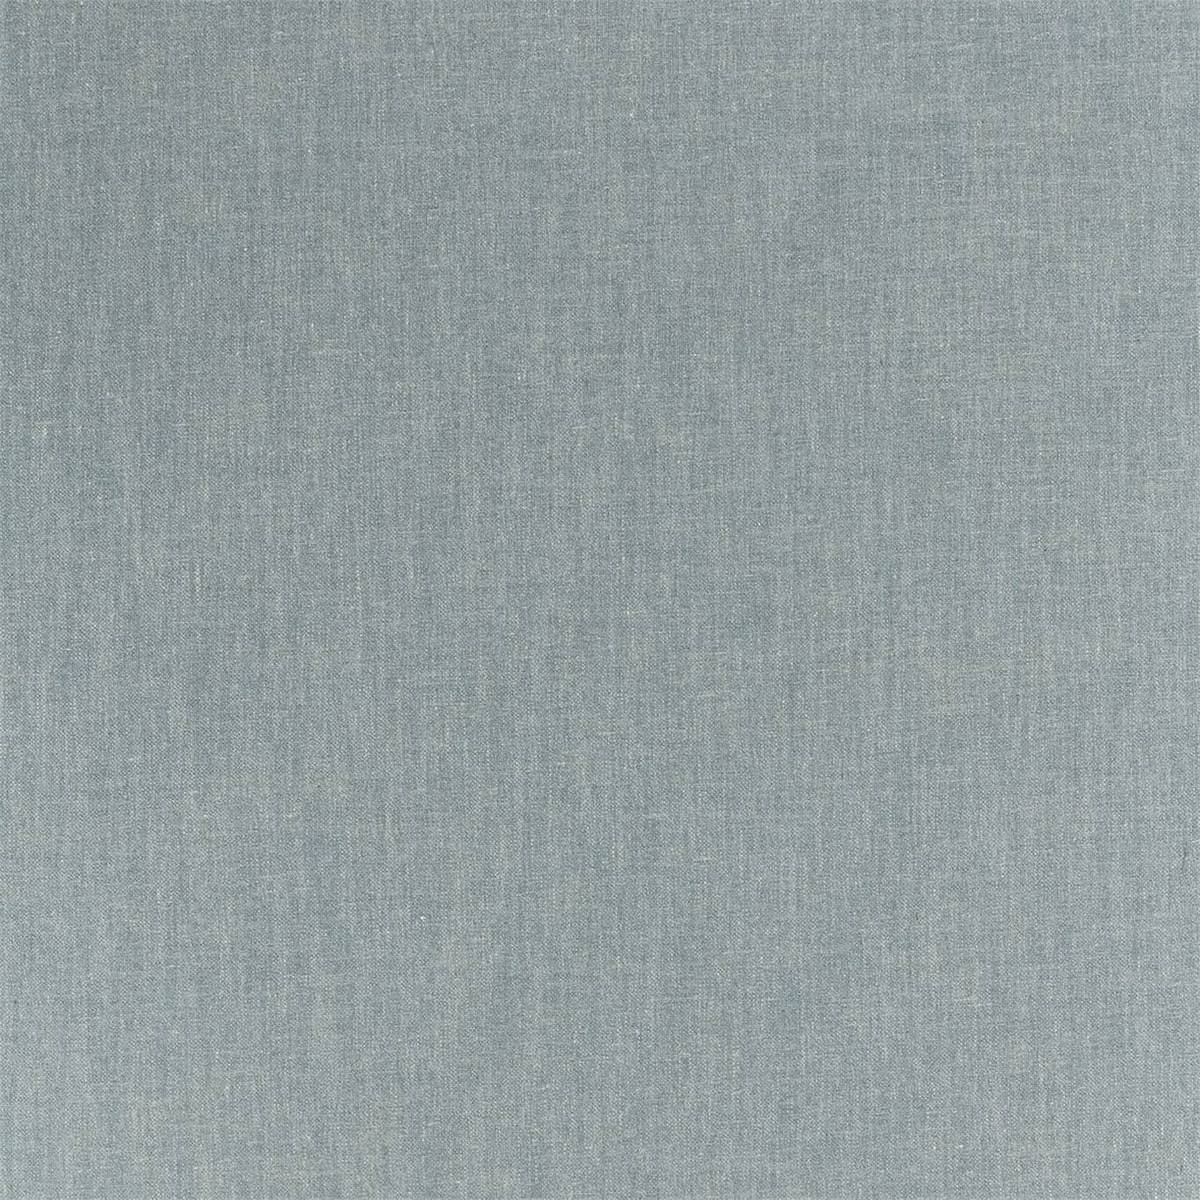 Hoy Slate Fabric by William Morris & Co.